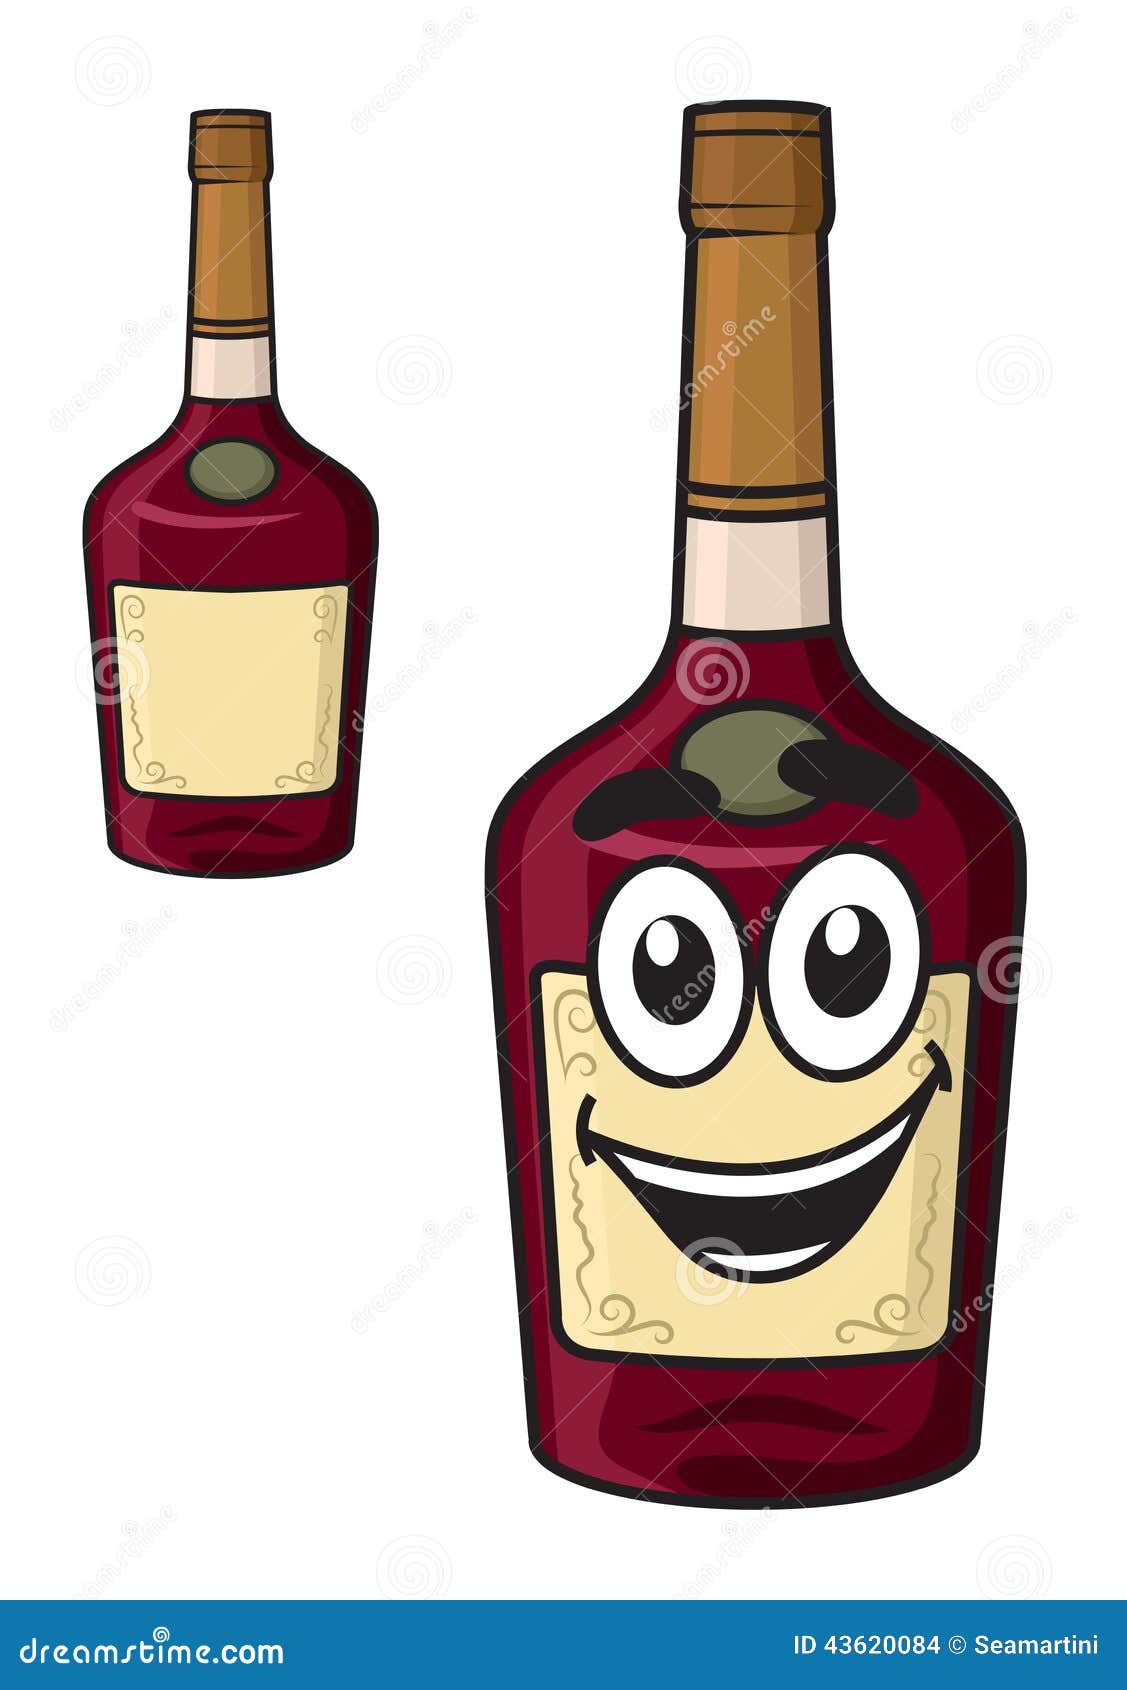 Cartoon Smiling Alcohol Bottle Stock Vector - Illustration of cork